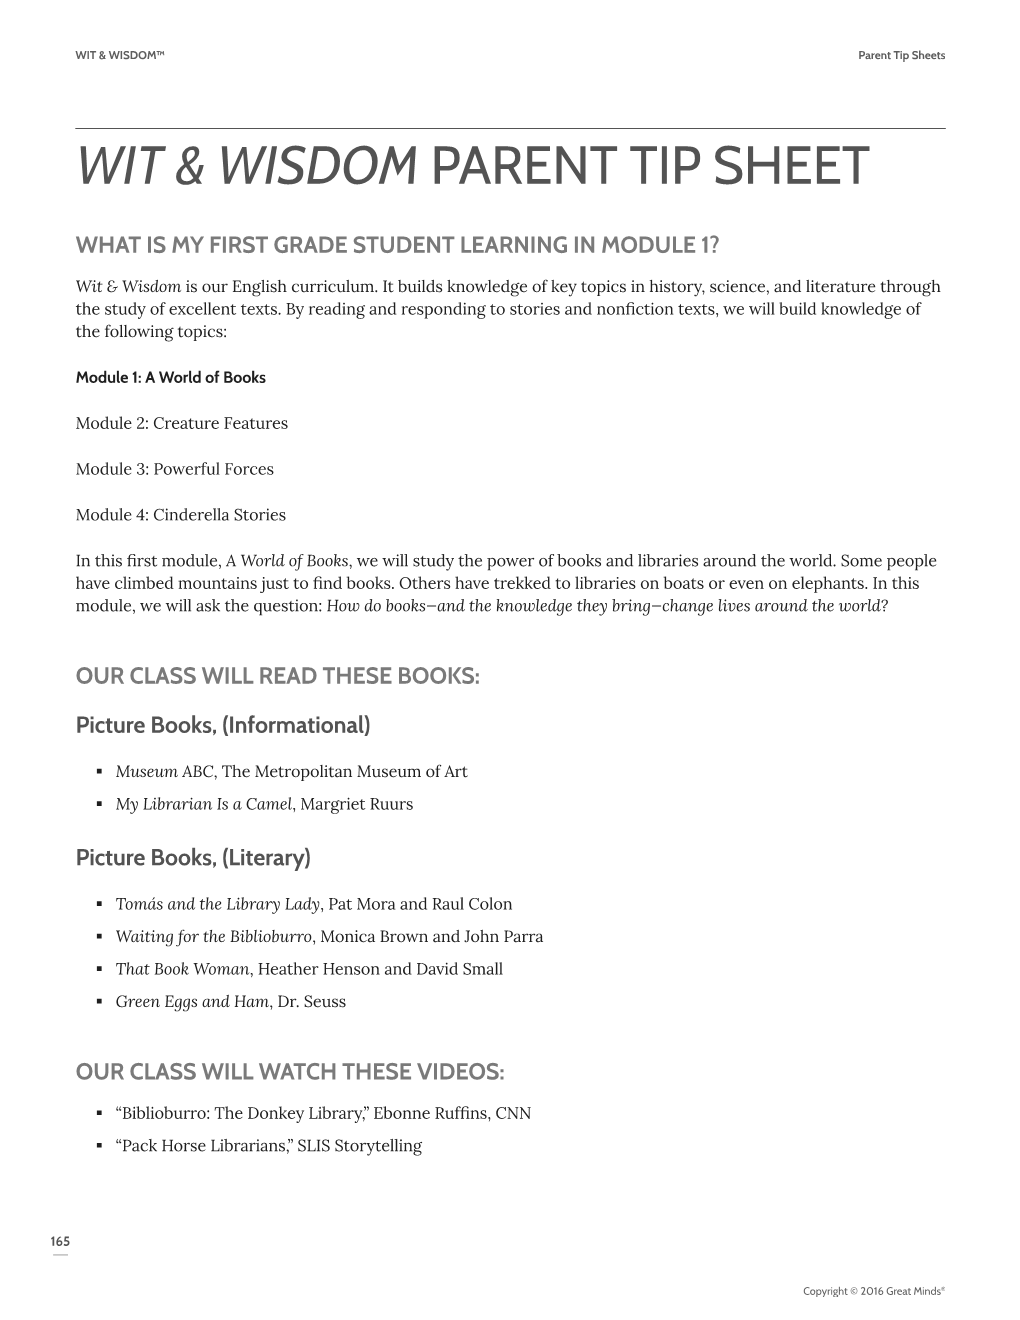 Wit & Wisdom Parent Tip Sheet